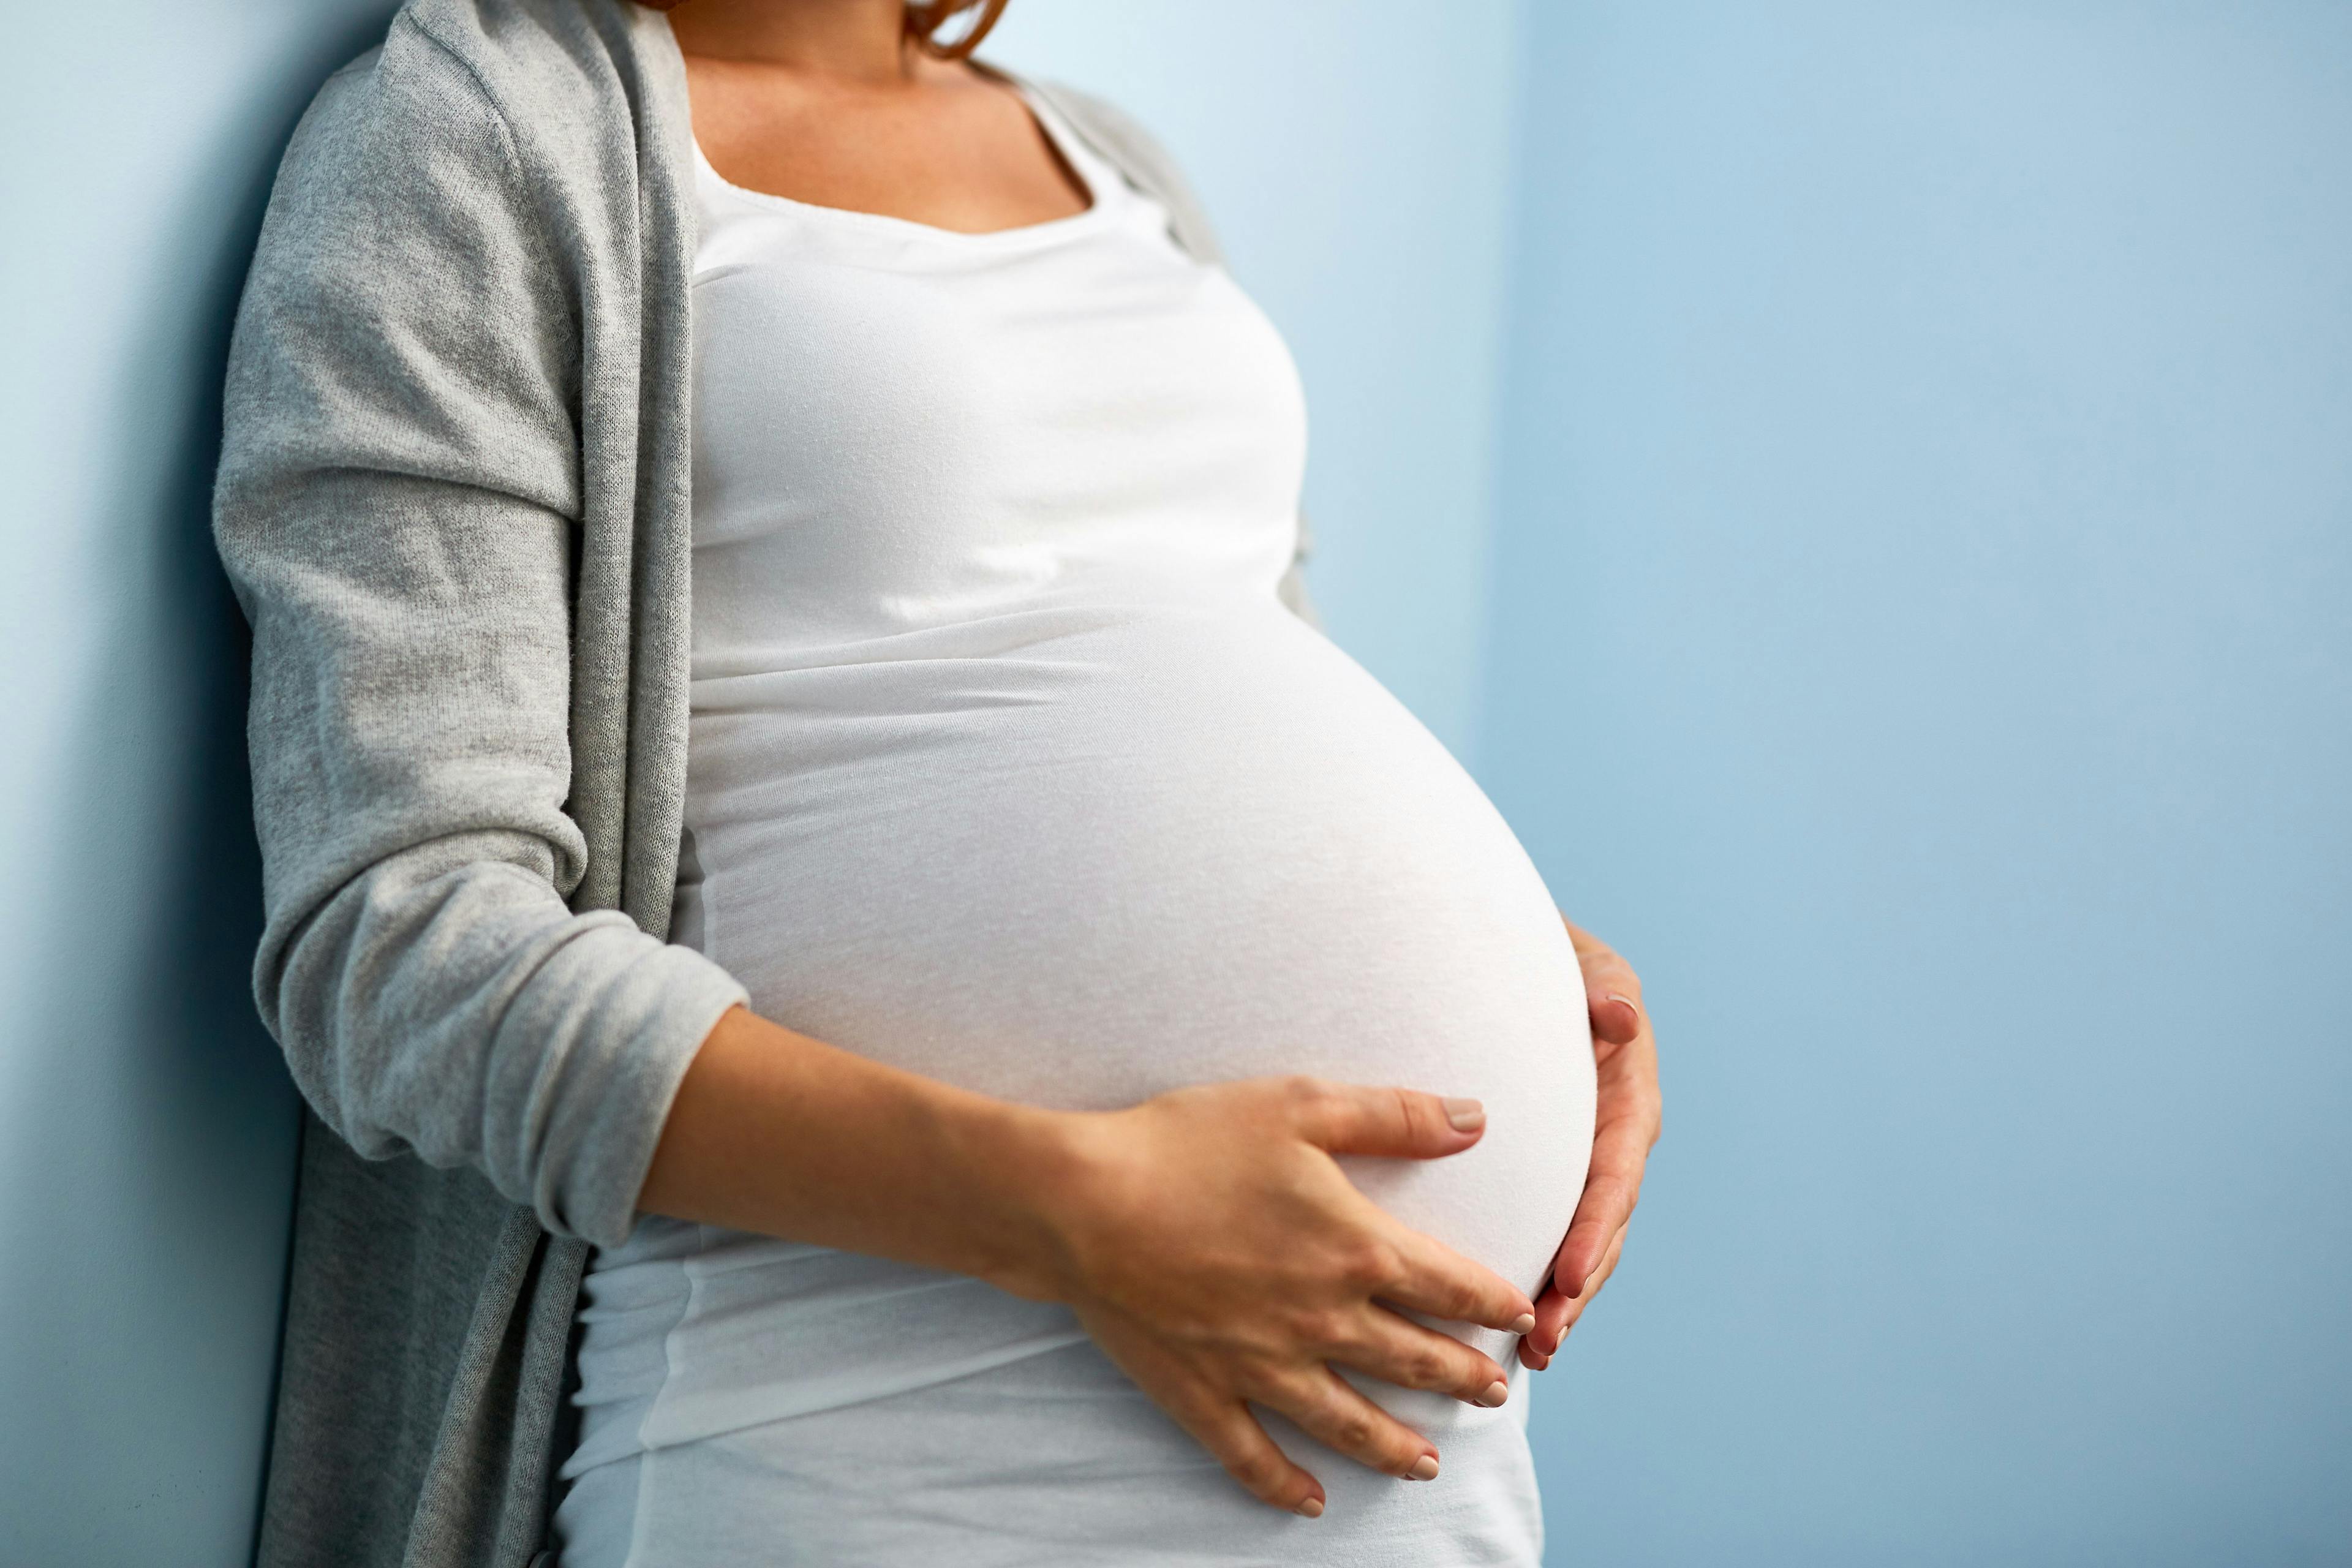 Prenatal exposure to endocrine-disrupting chemicals increases risk of liver injury